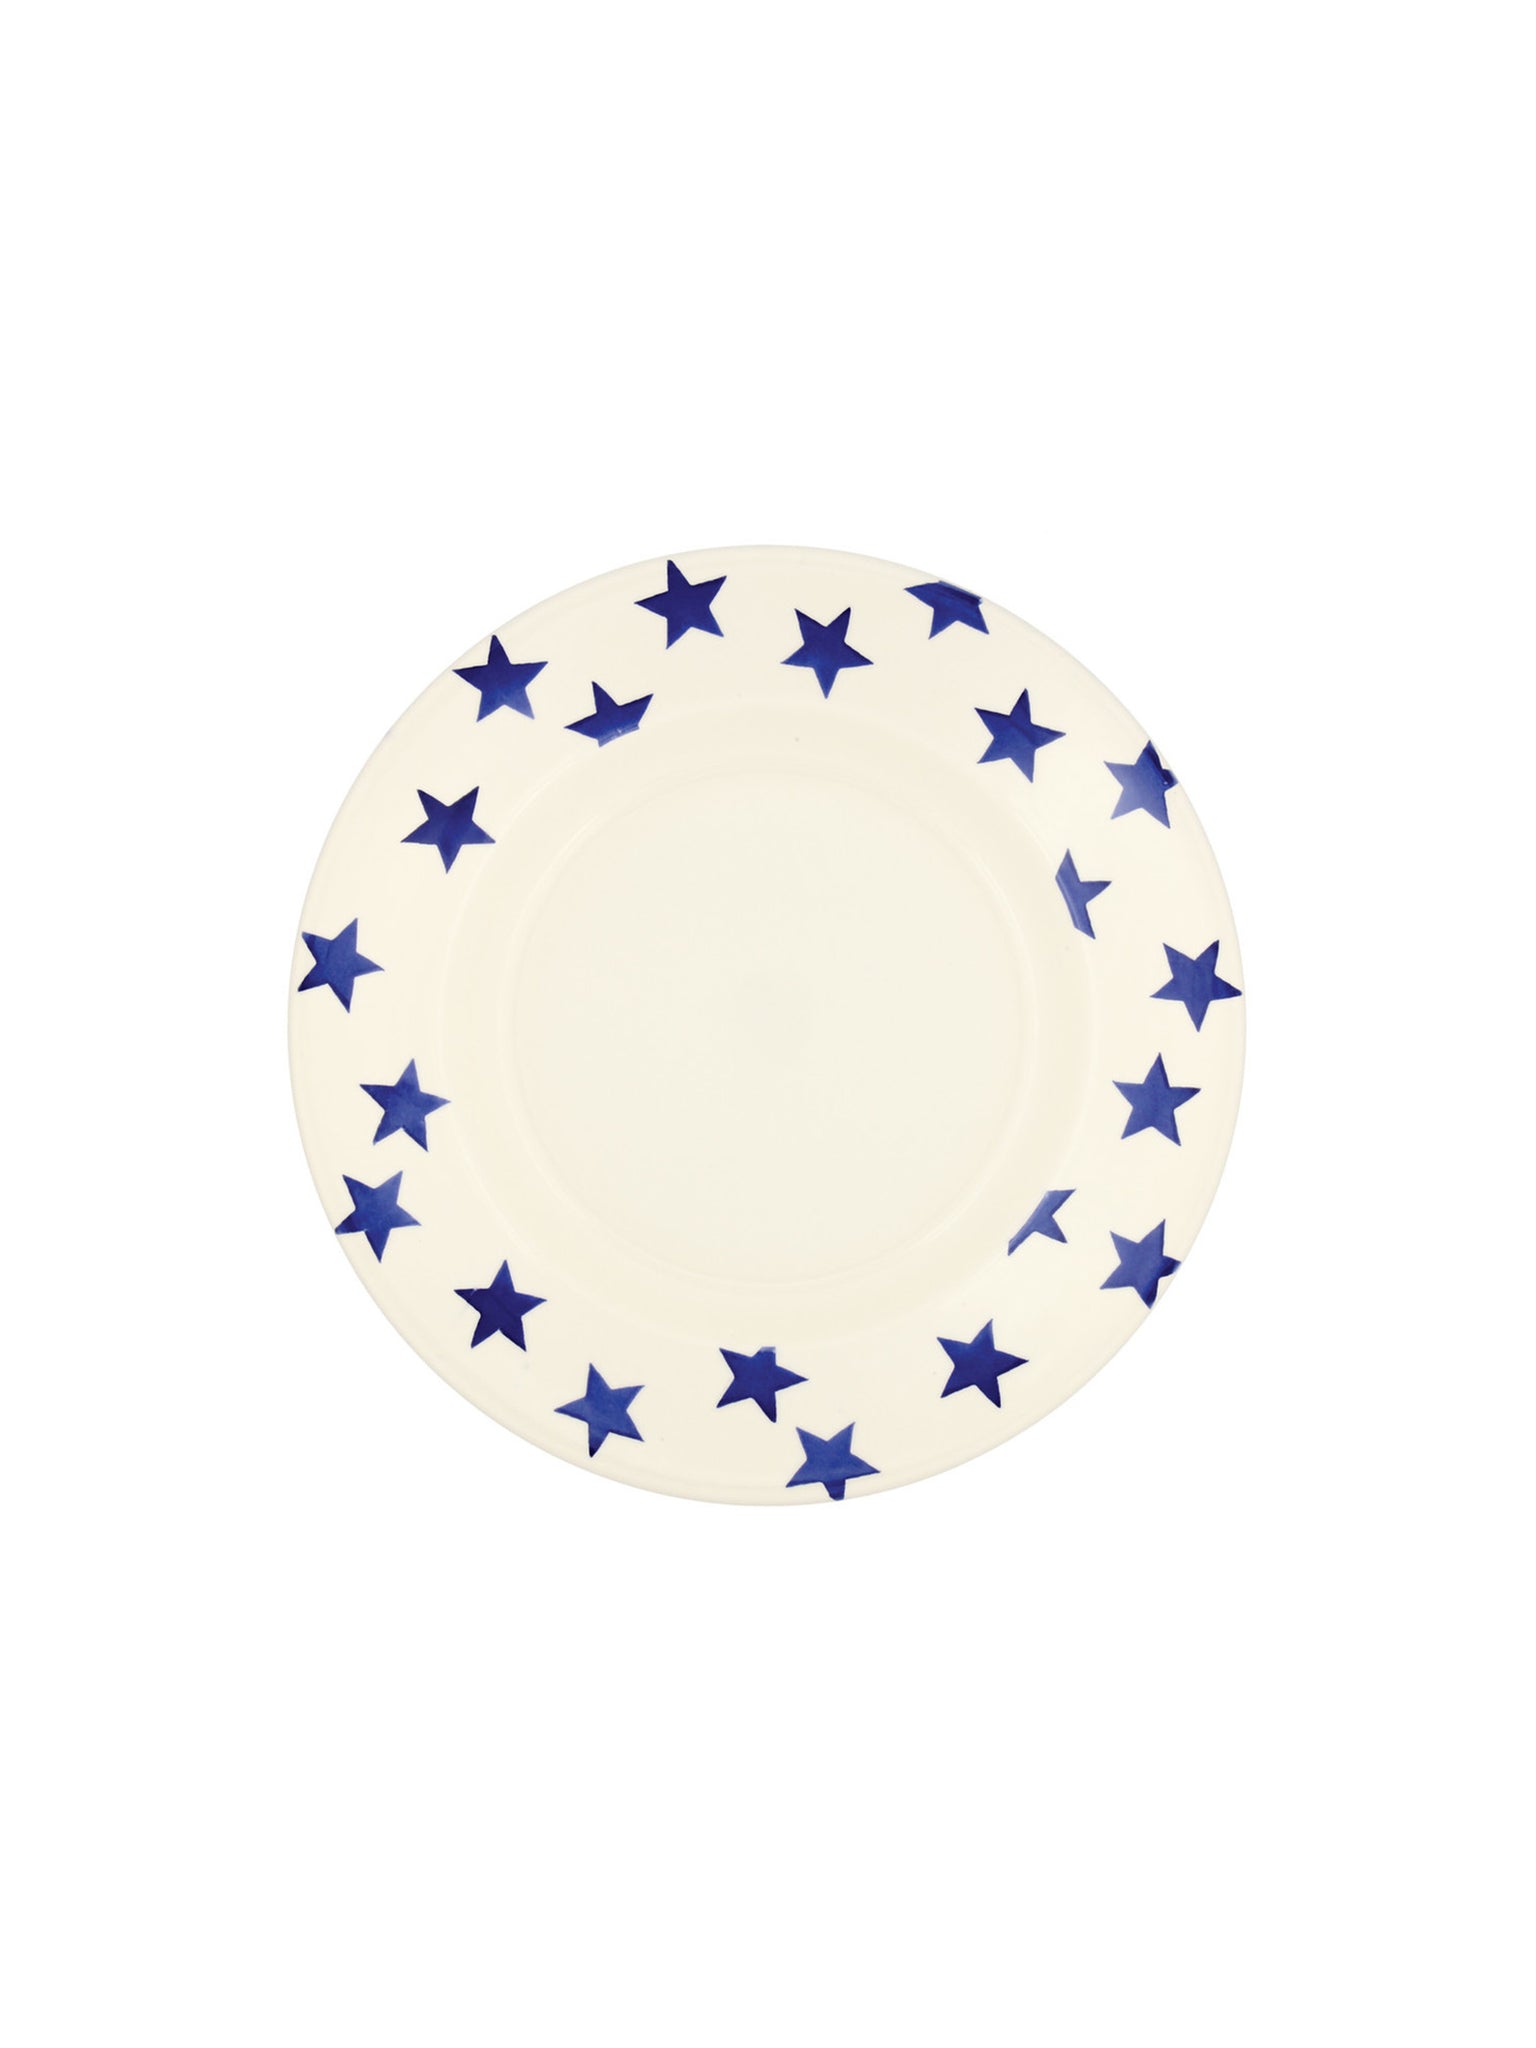 Emma Bridgewater Blue Star Dinner Plate Weston Table